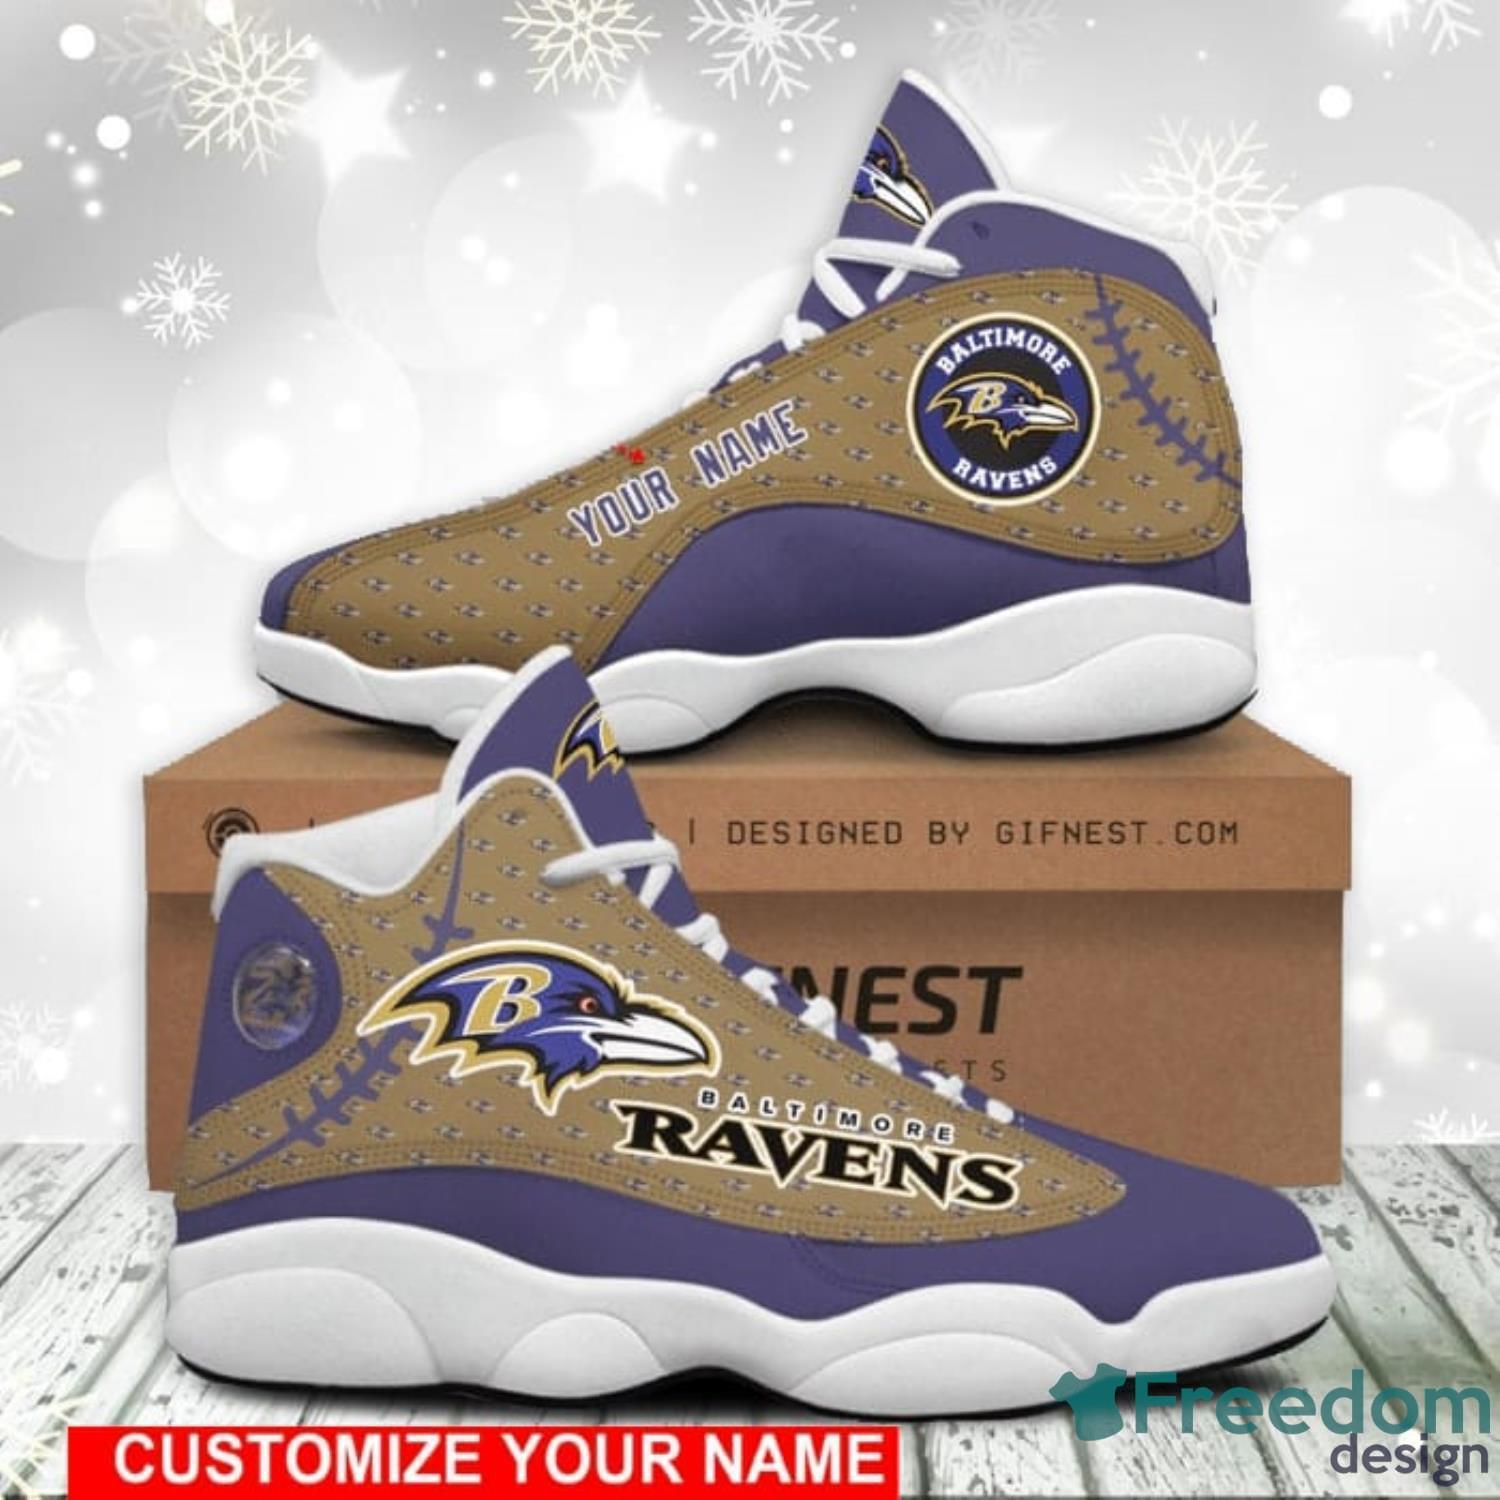 Baltimore Ravens Custom Name Air Jordan 11 Sneaker Shoes For Sport Fans -  Banantees